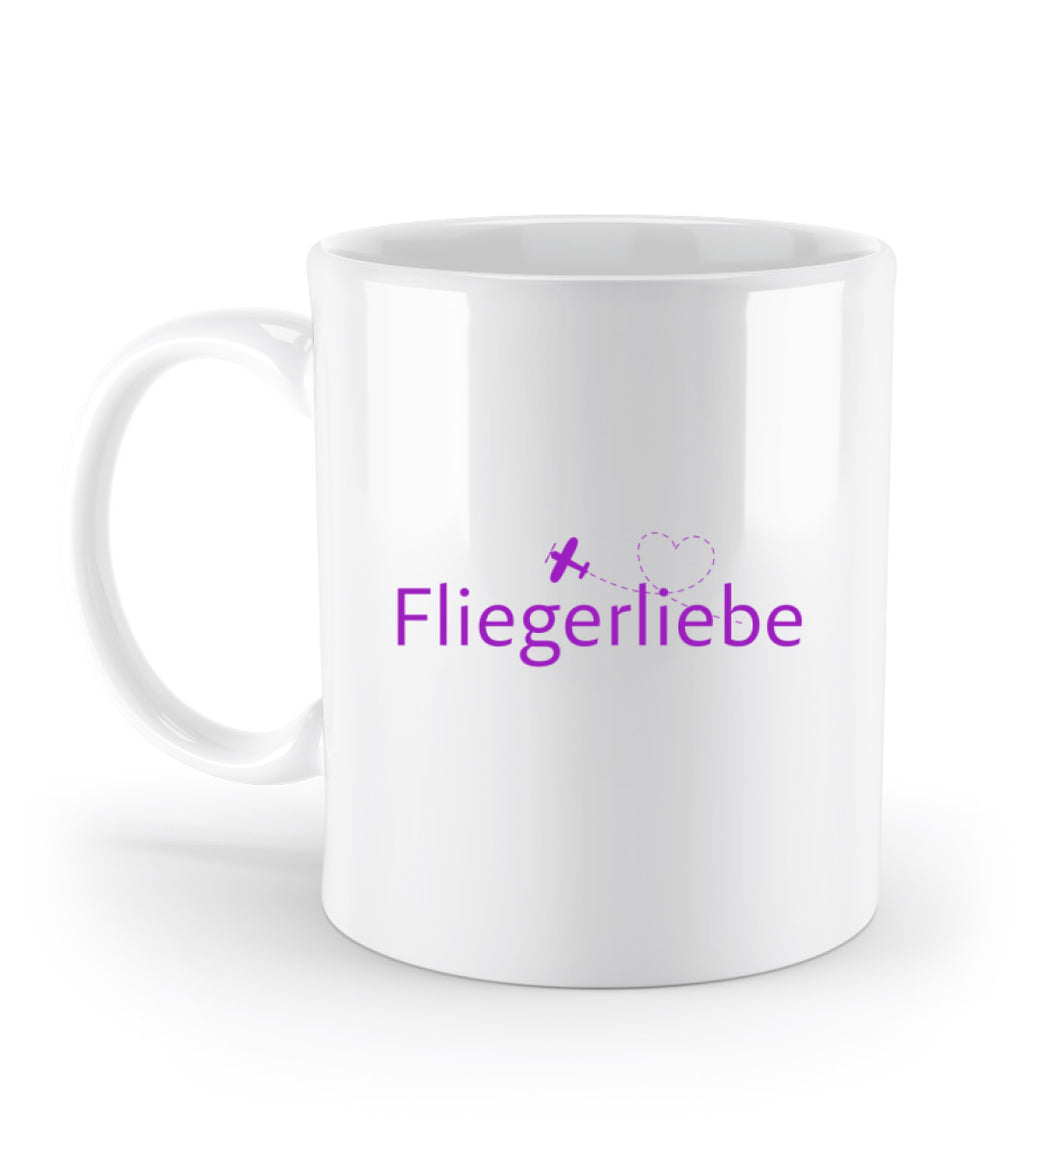 Fliegerliebe - Cockpit Cup